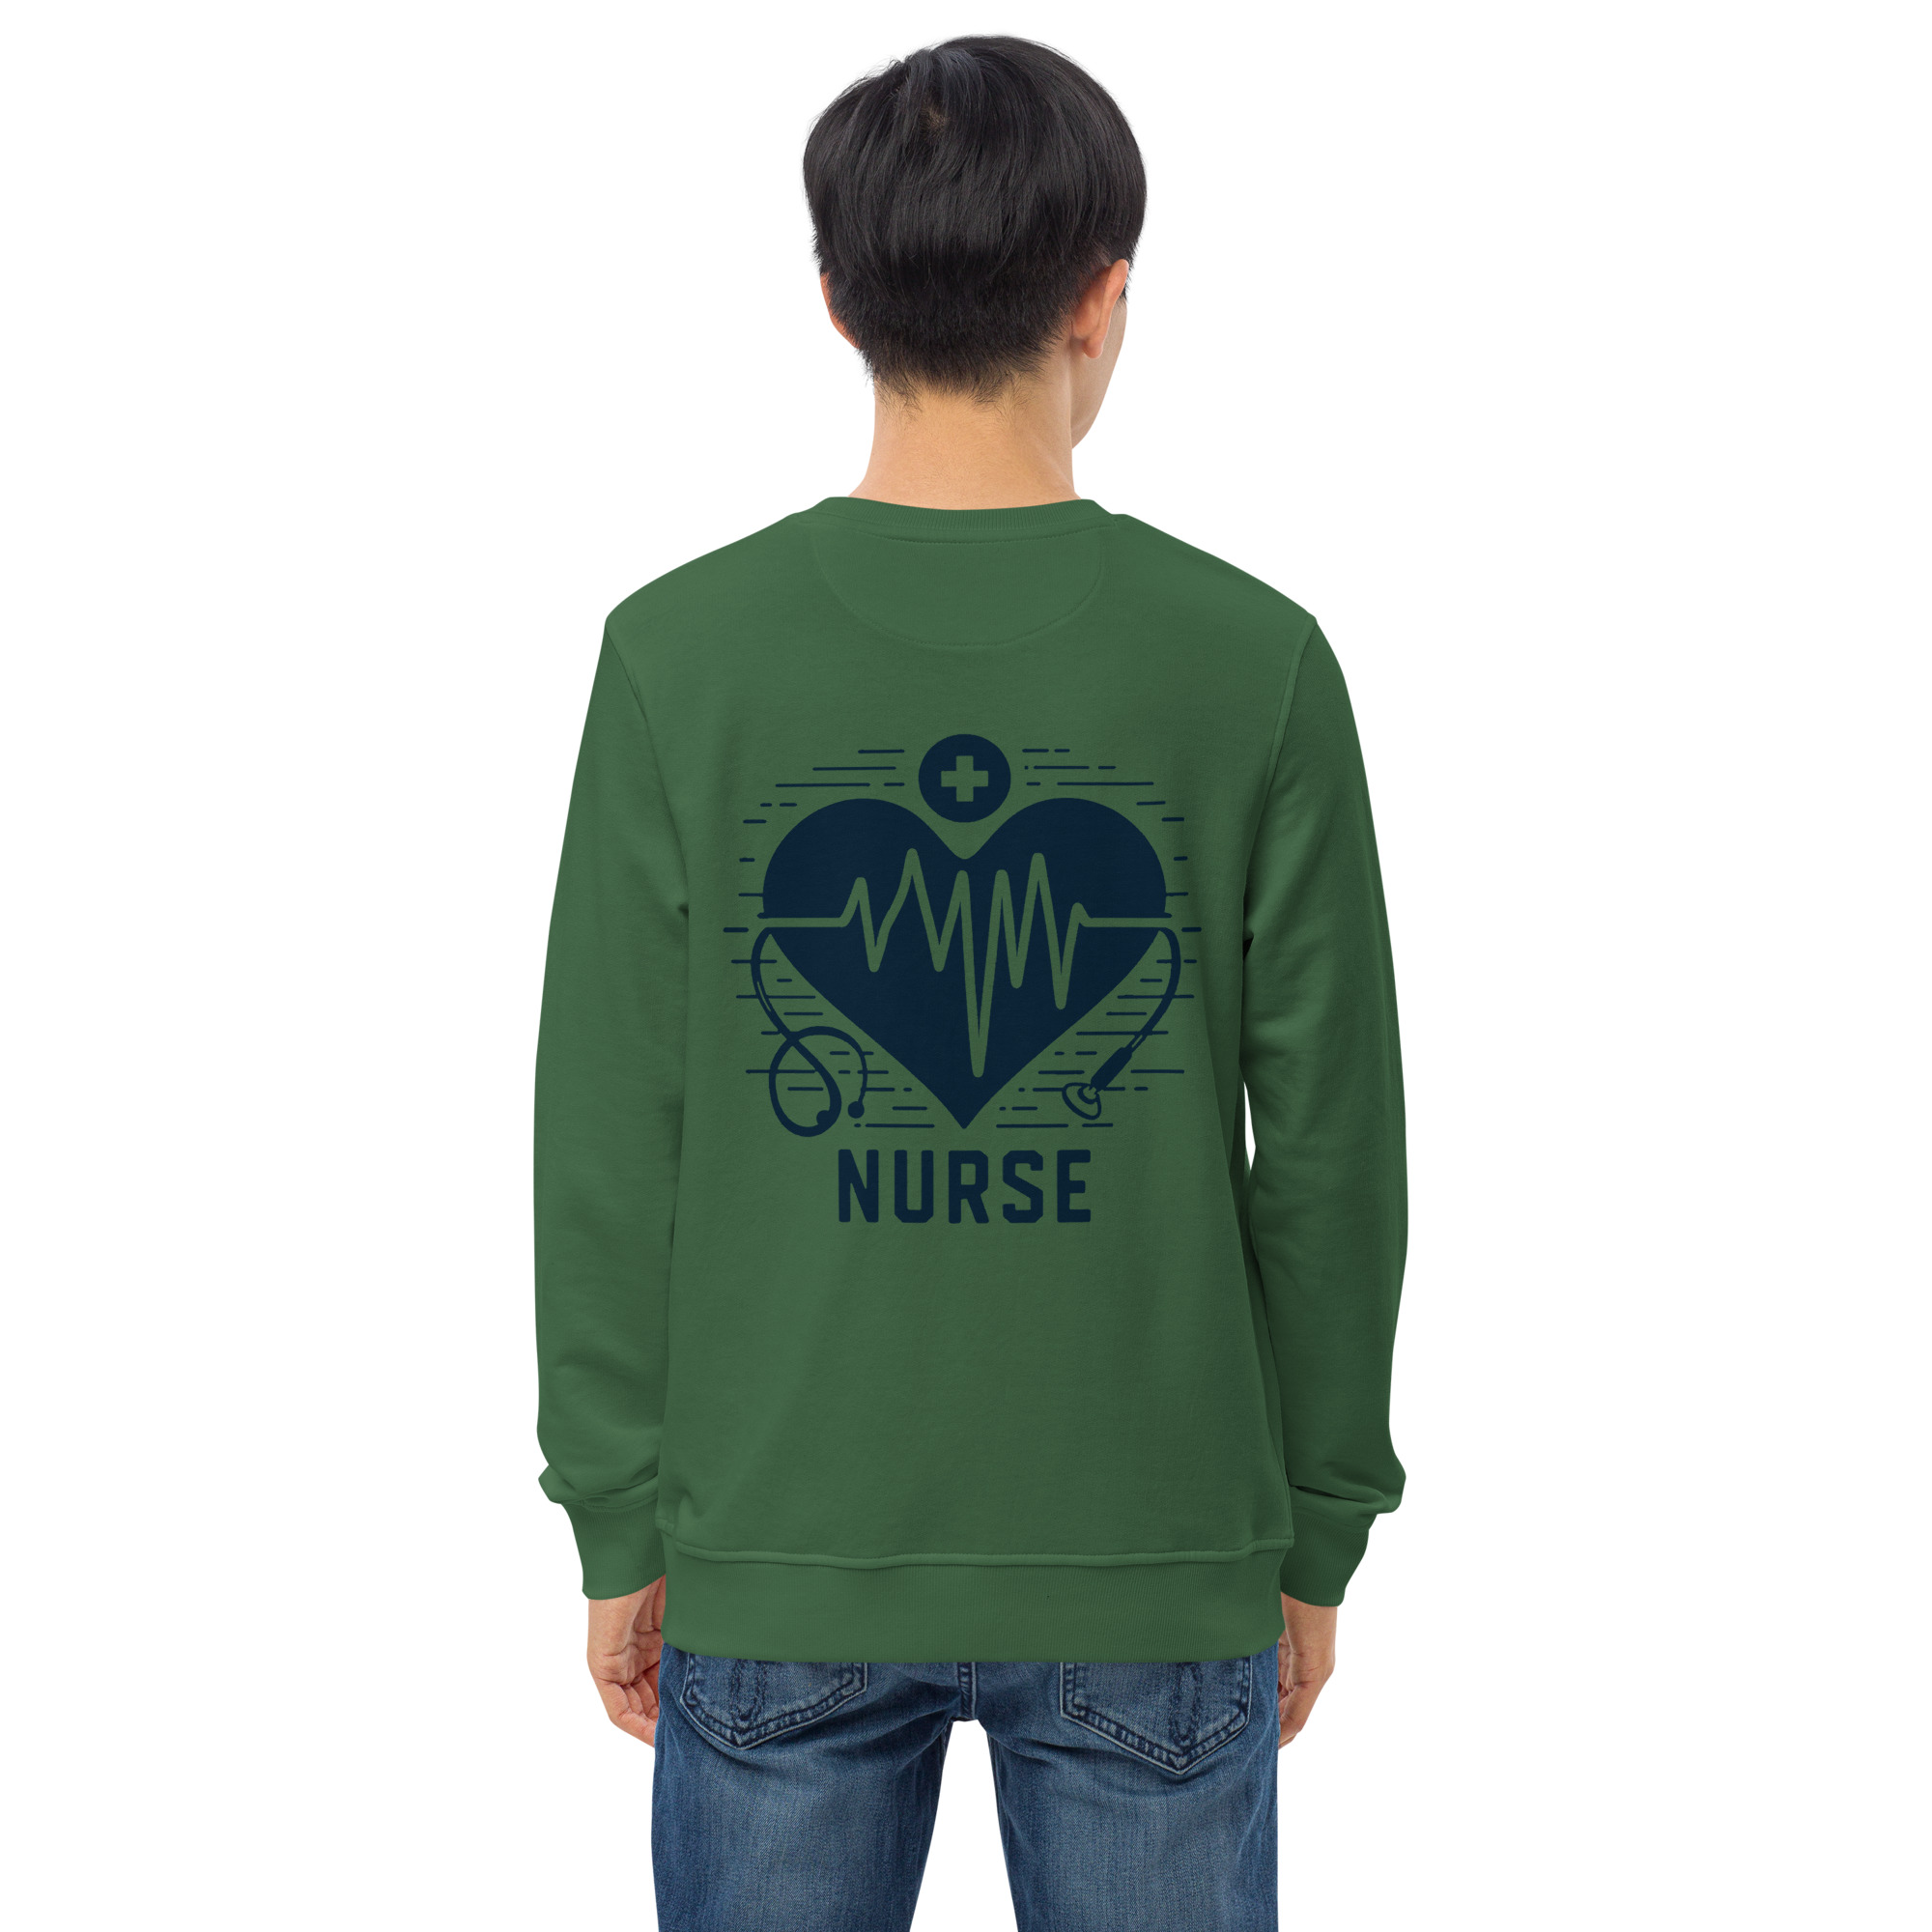 Nurse Sweatshirt